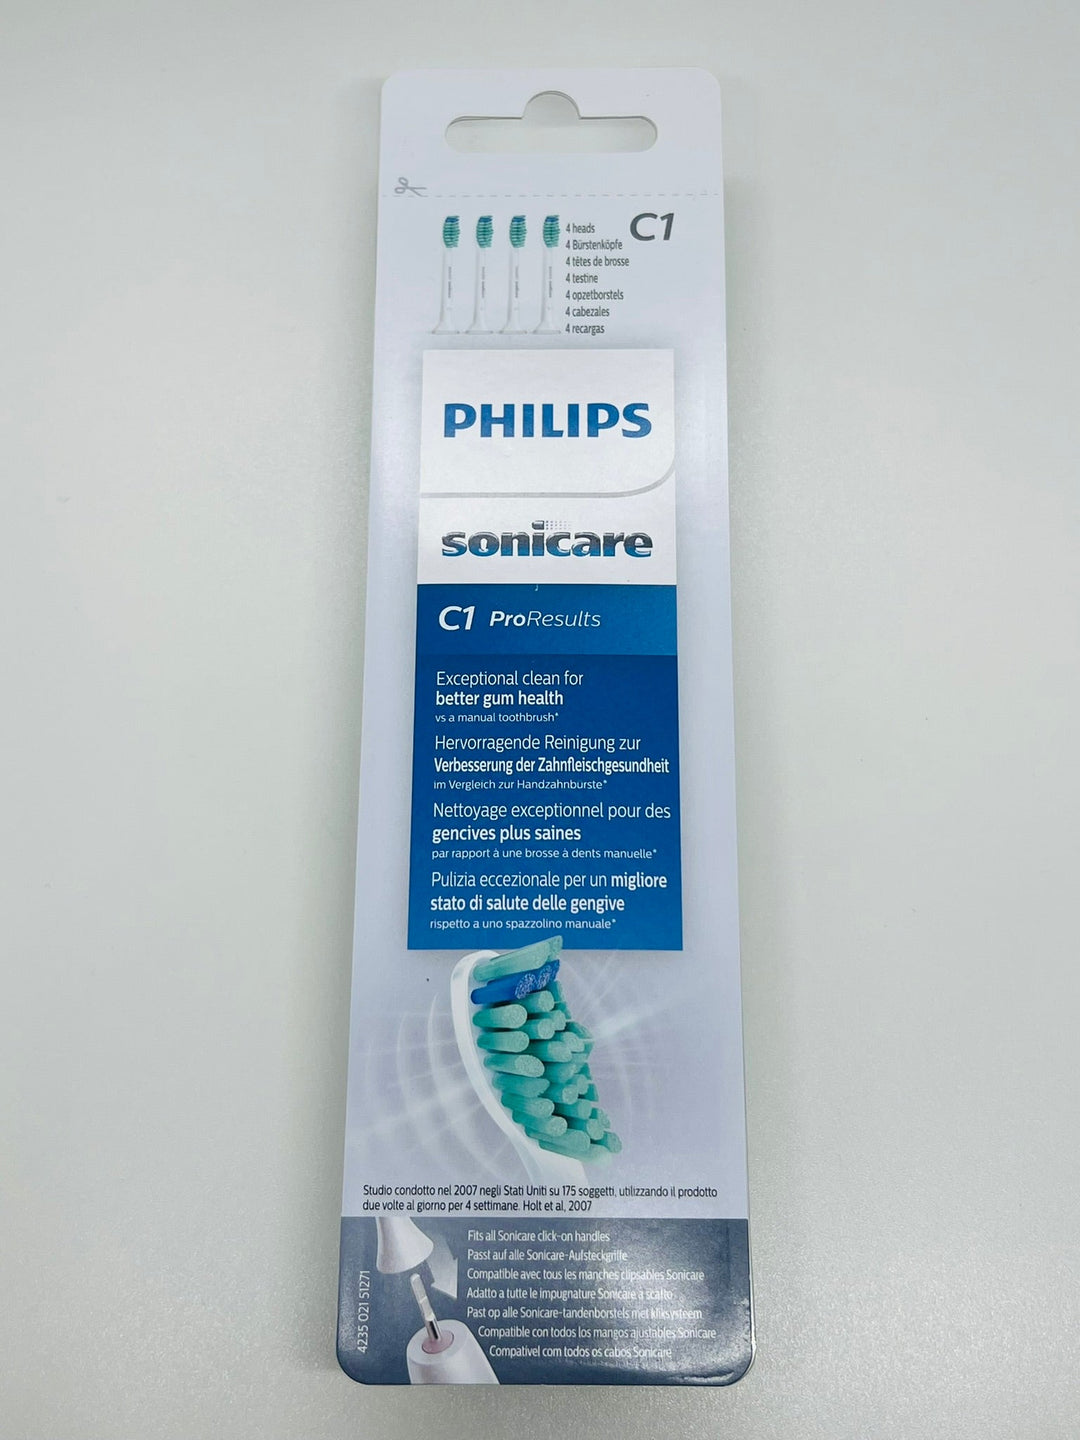 Philips Sonicare C1 Pro Result